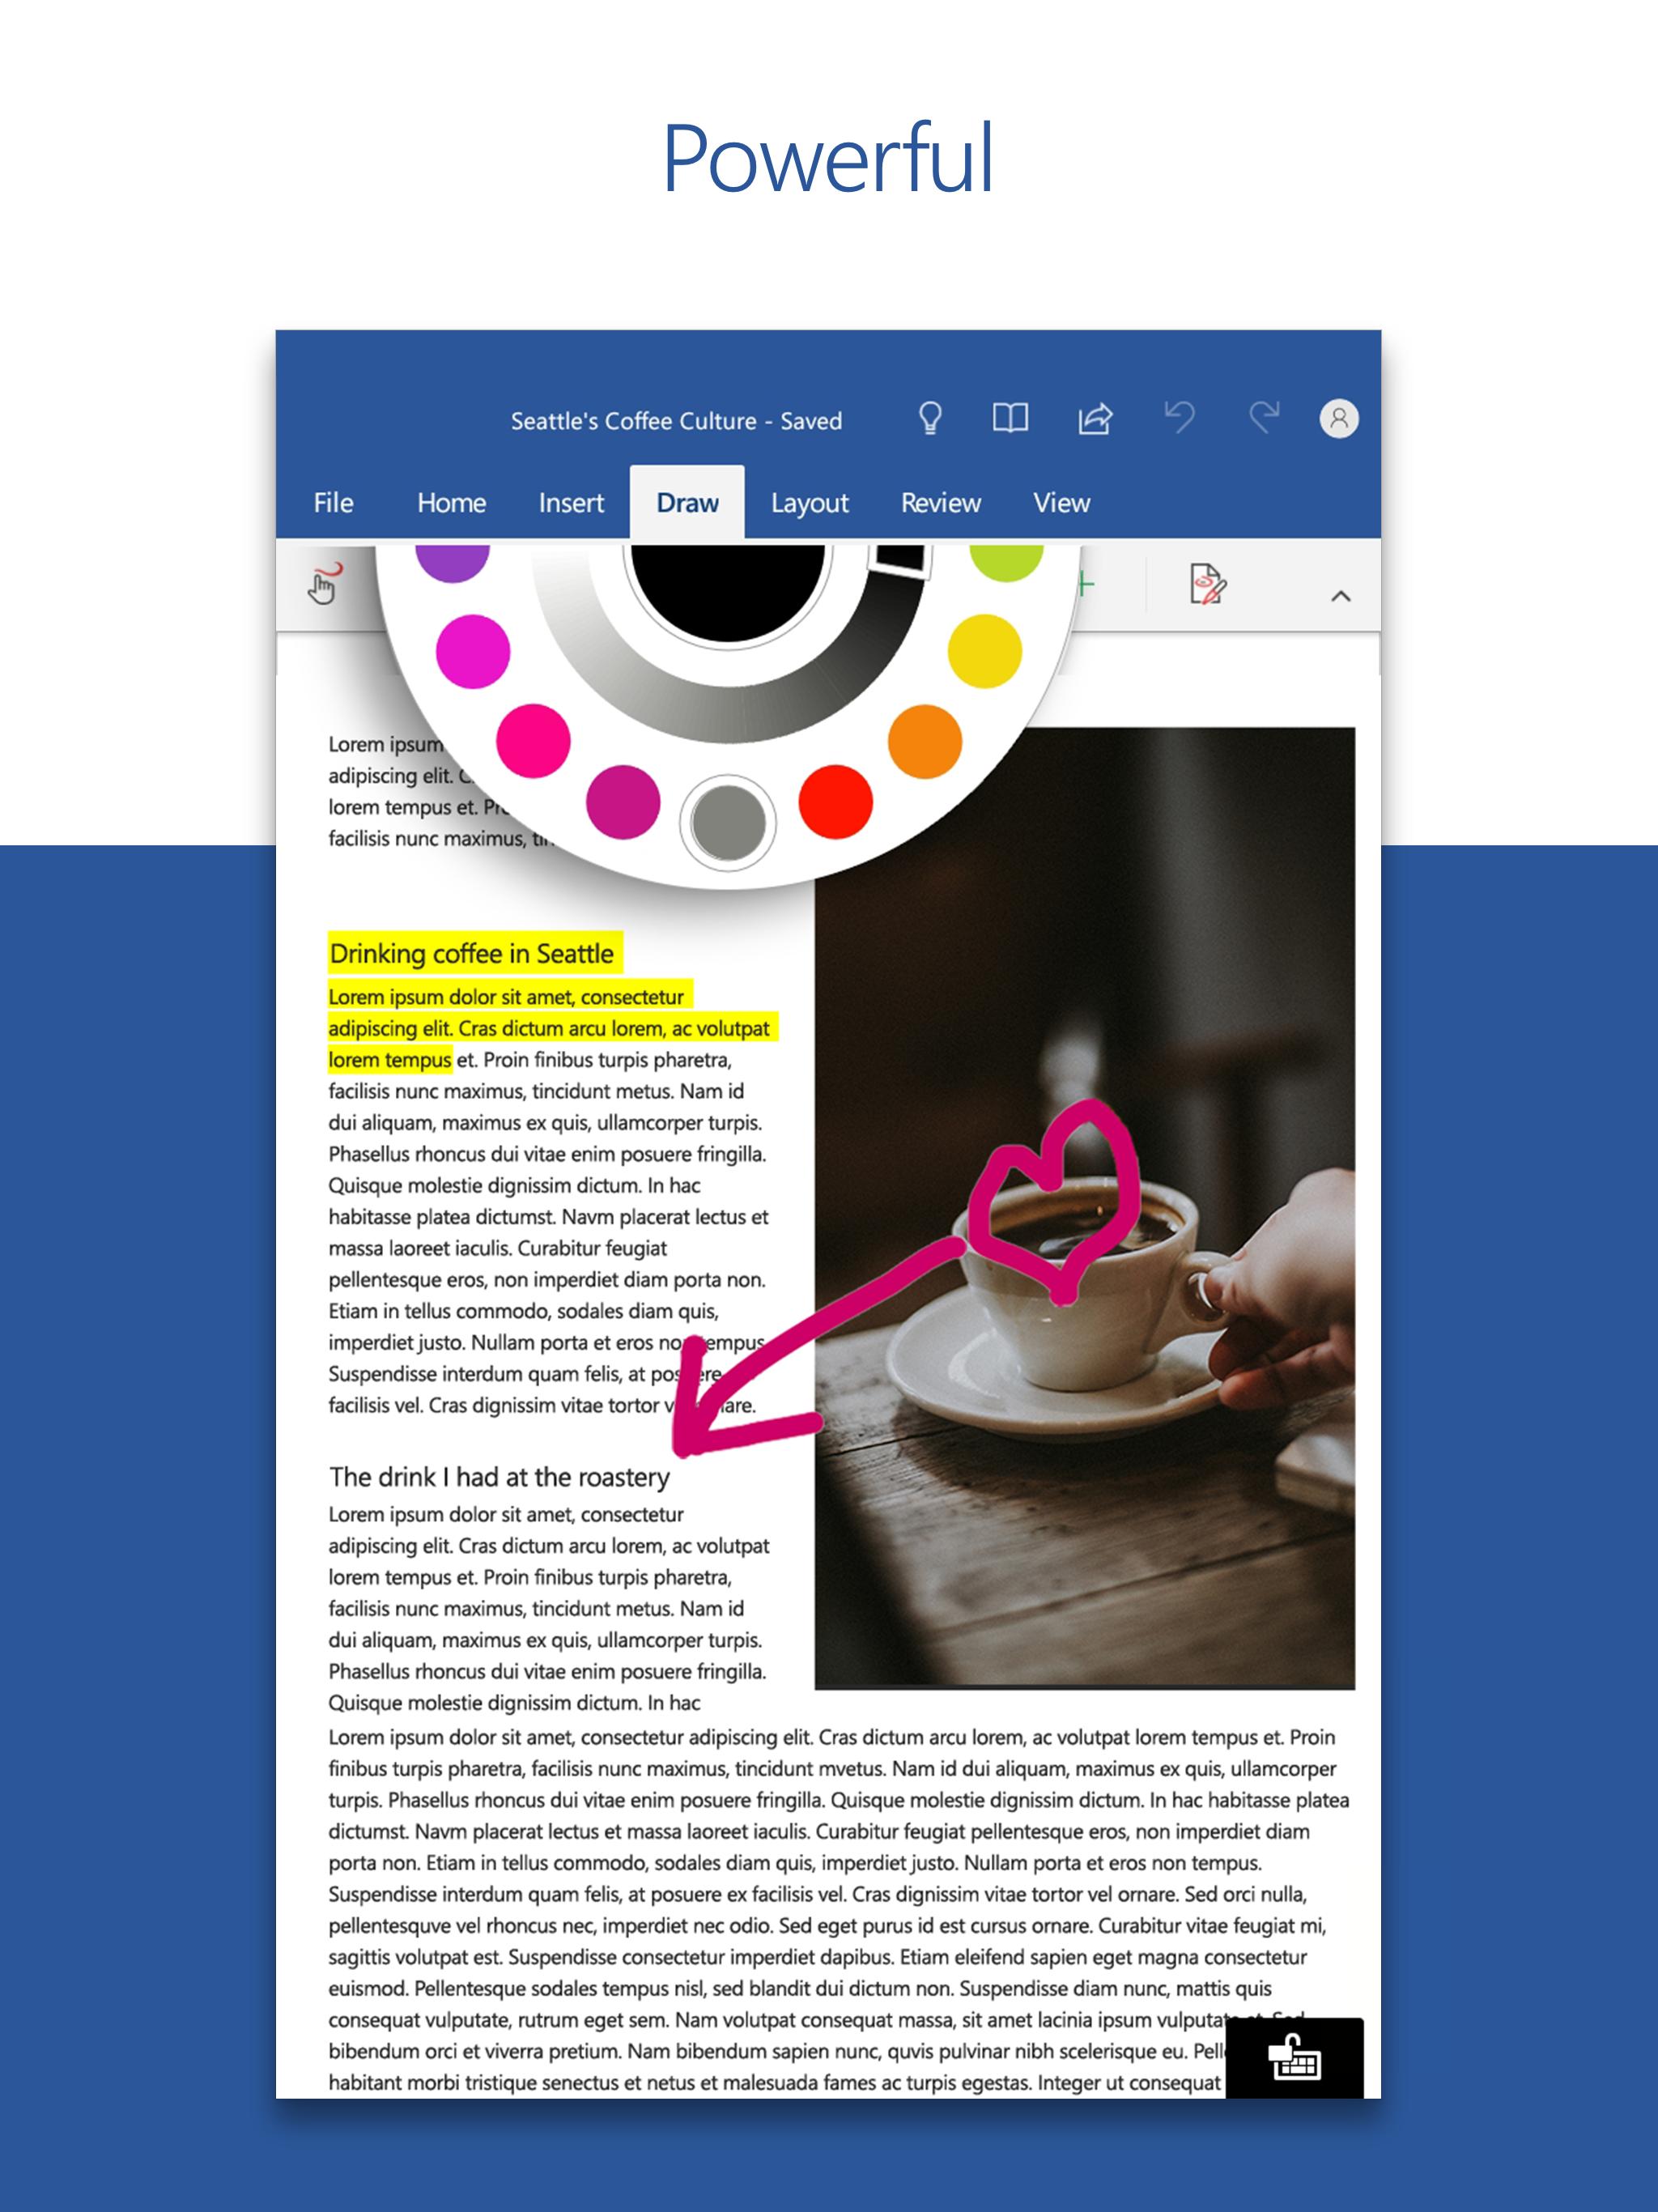 Microsoft Word: Write, Edit & Share Docs on the Go 16.0.13426.20196 Screenshot 12